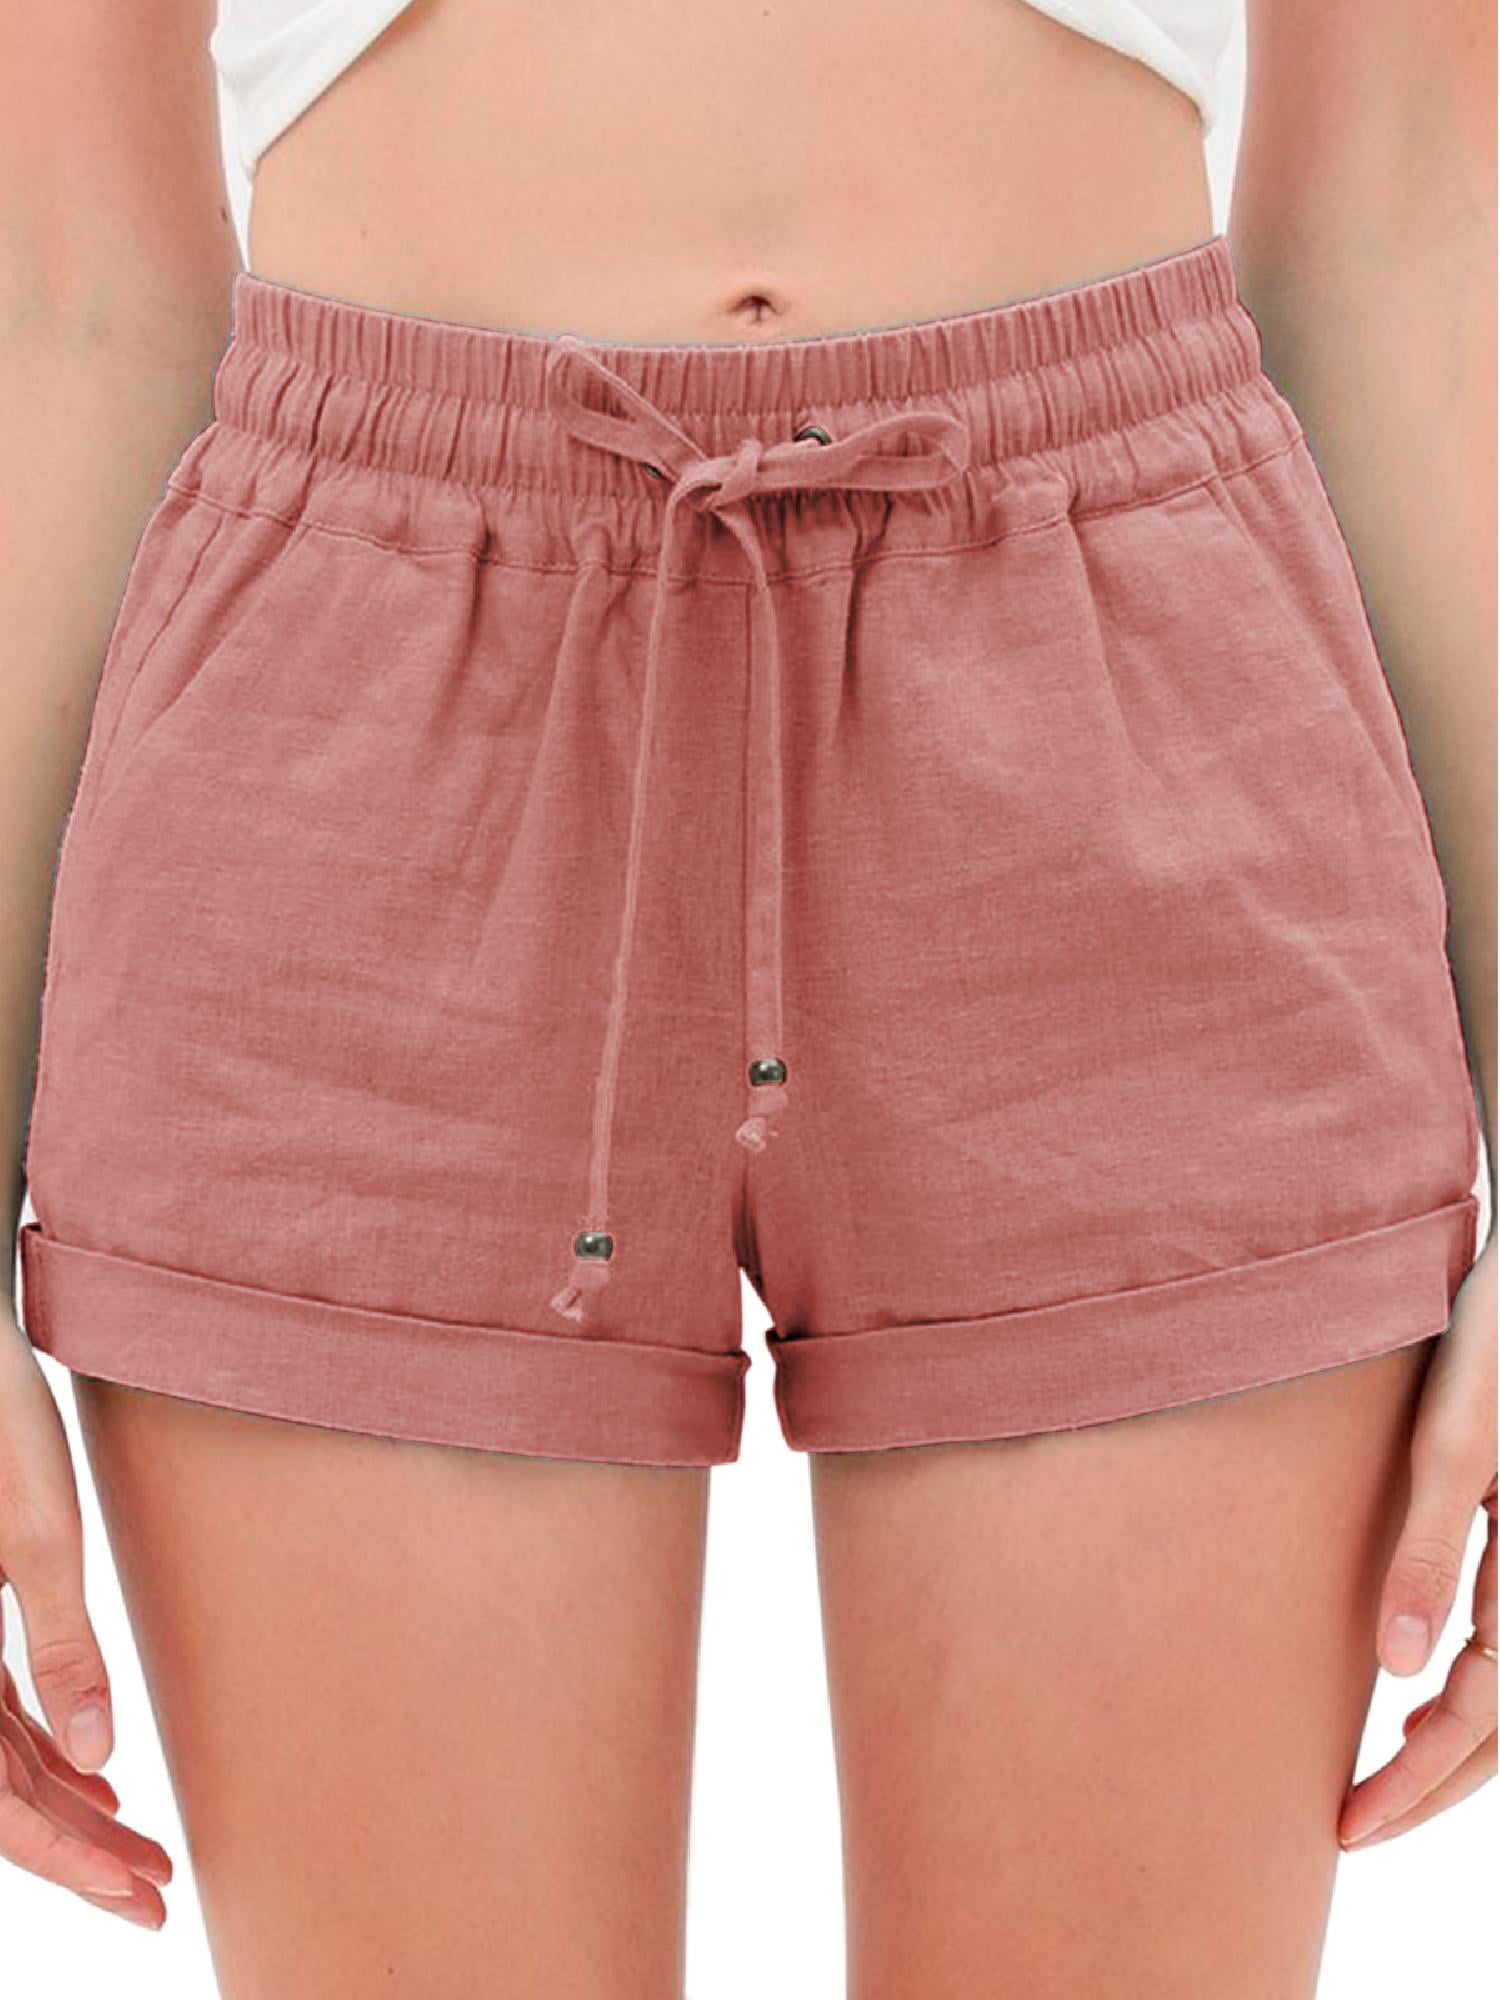 aihihe Shorts for Women Casual Summer Linen Cotton Walking Shorts Stretch Shorts Pockets Casual Yoga Pants 